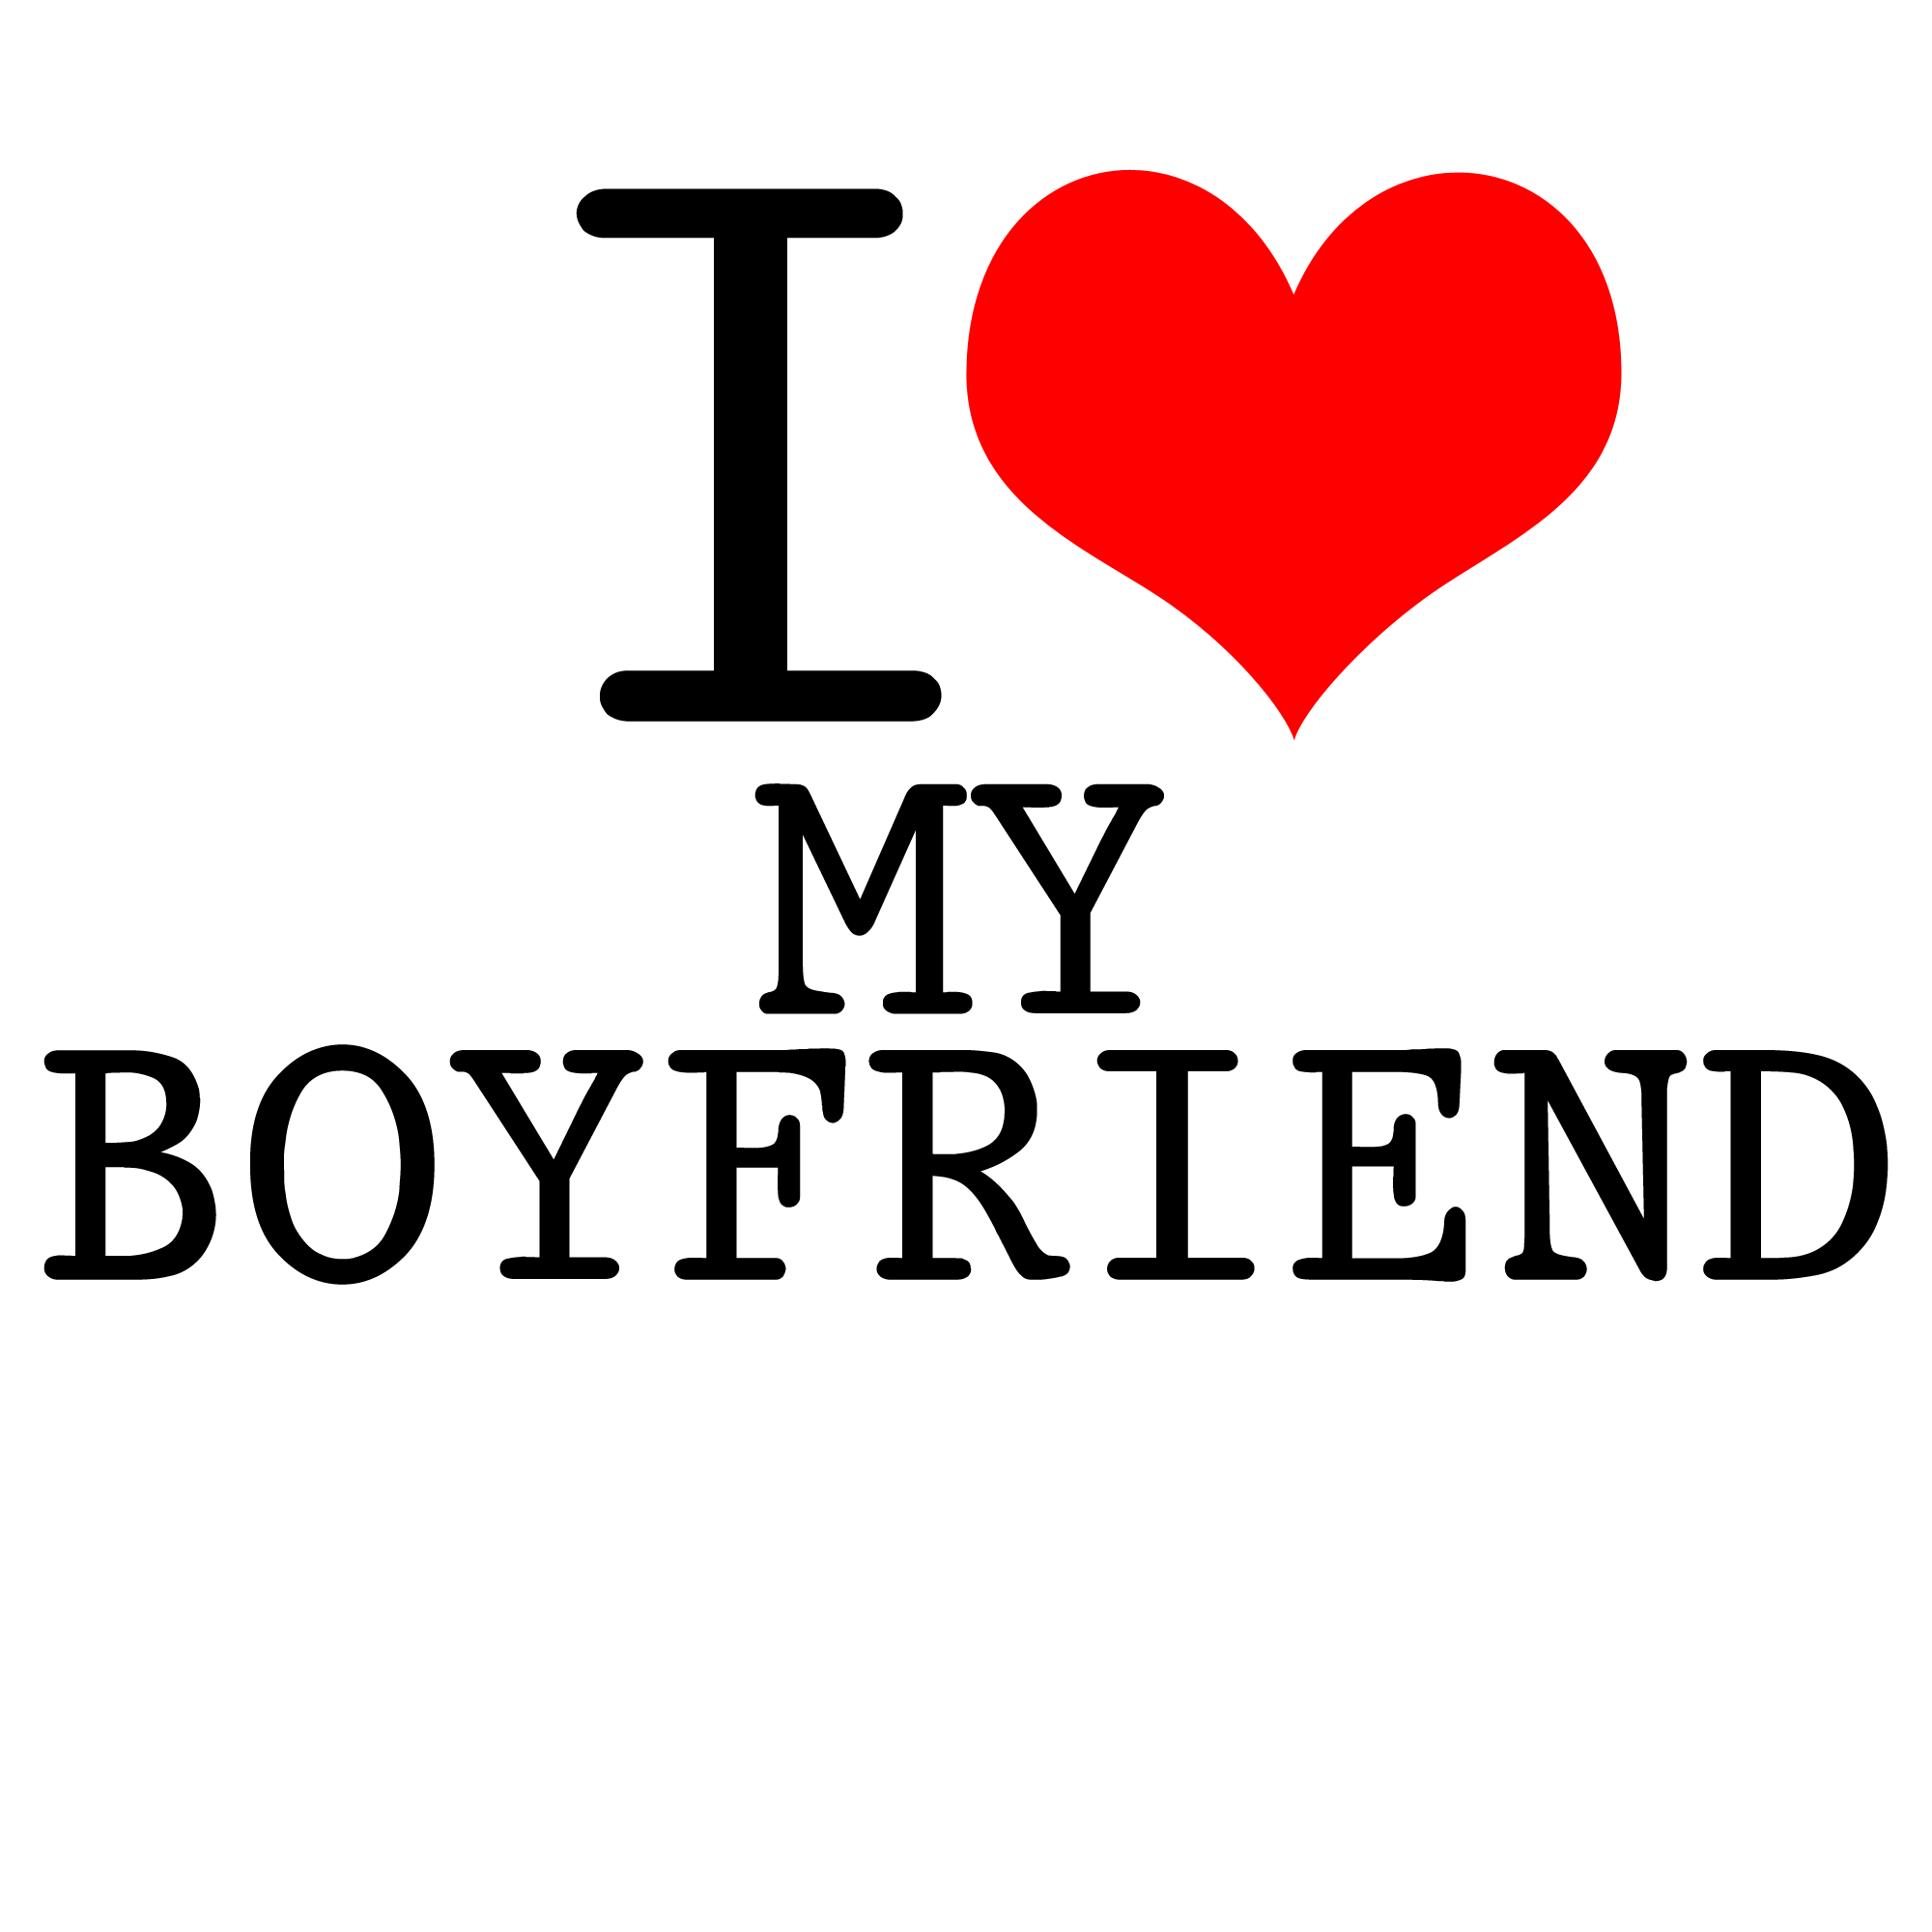 I Love my boyfriend. I Love my boyfriend картинка. Boyfriend надпись. I Love my boyfriend рамка. Май лов ми